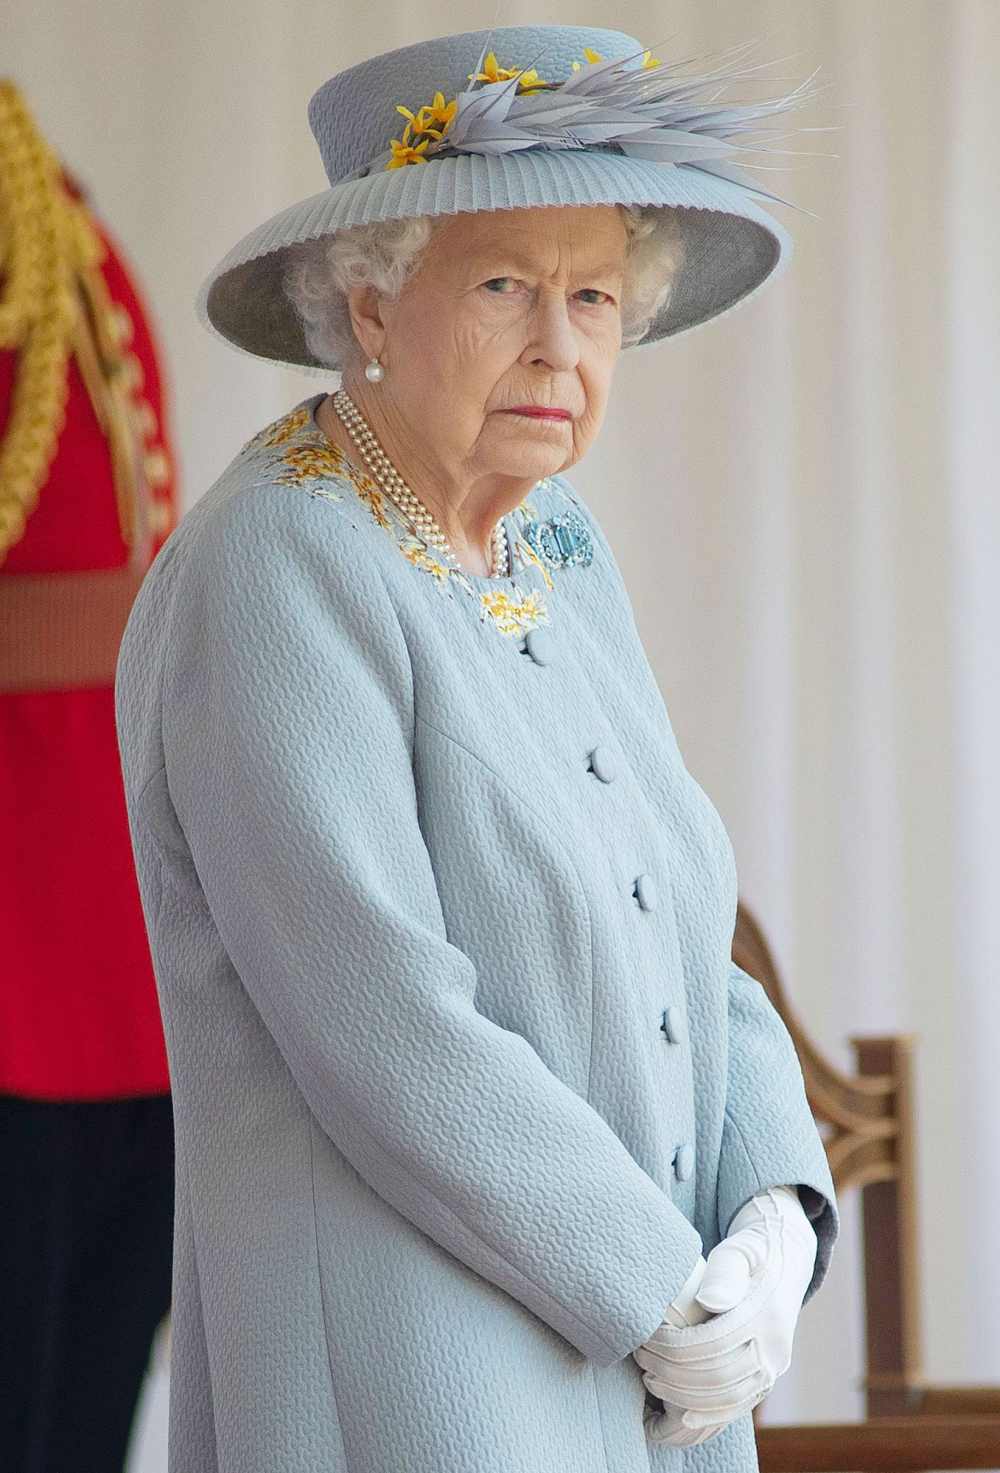 Intruder With Crossbow Arrested Windsor Castle Queen Elizabeth II Celebrated Christmas